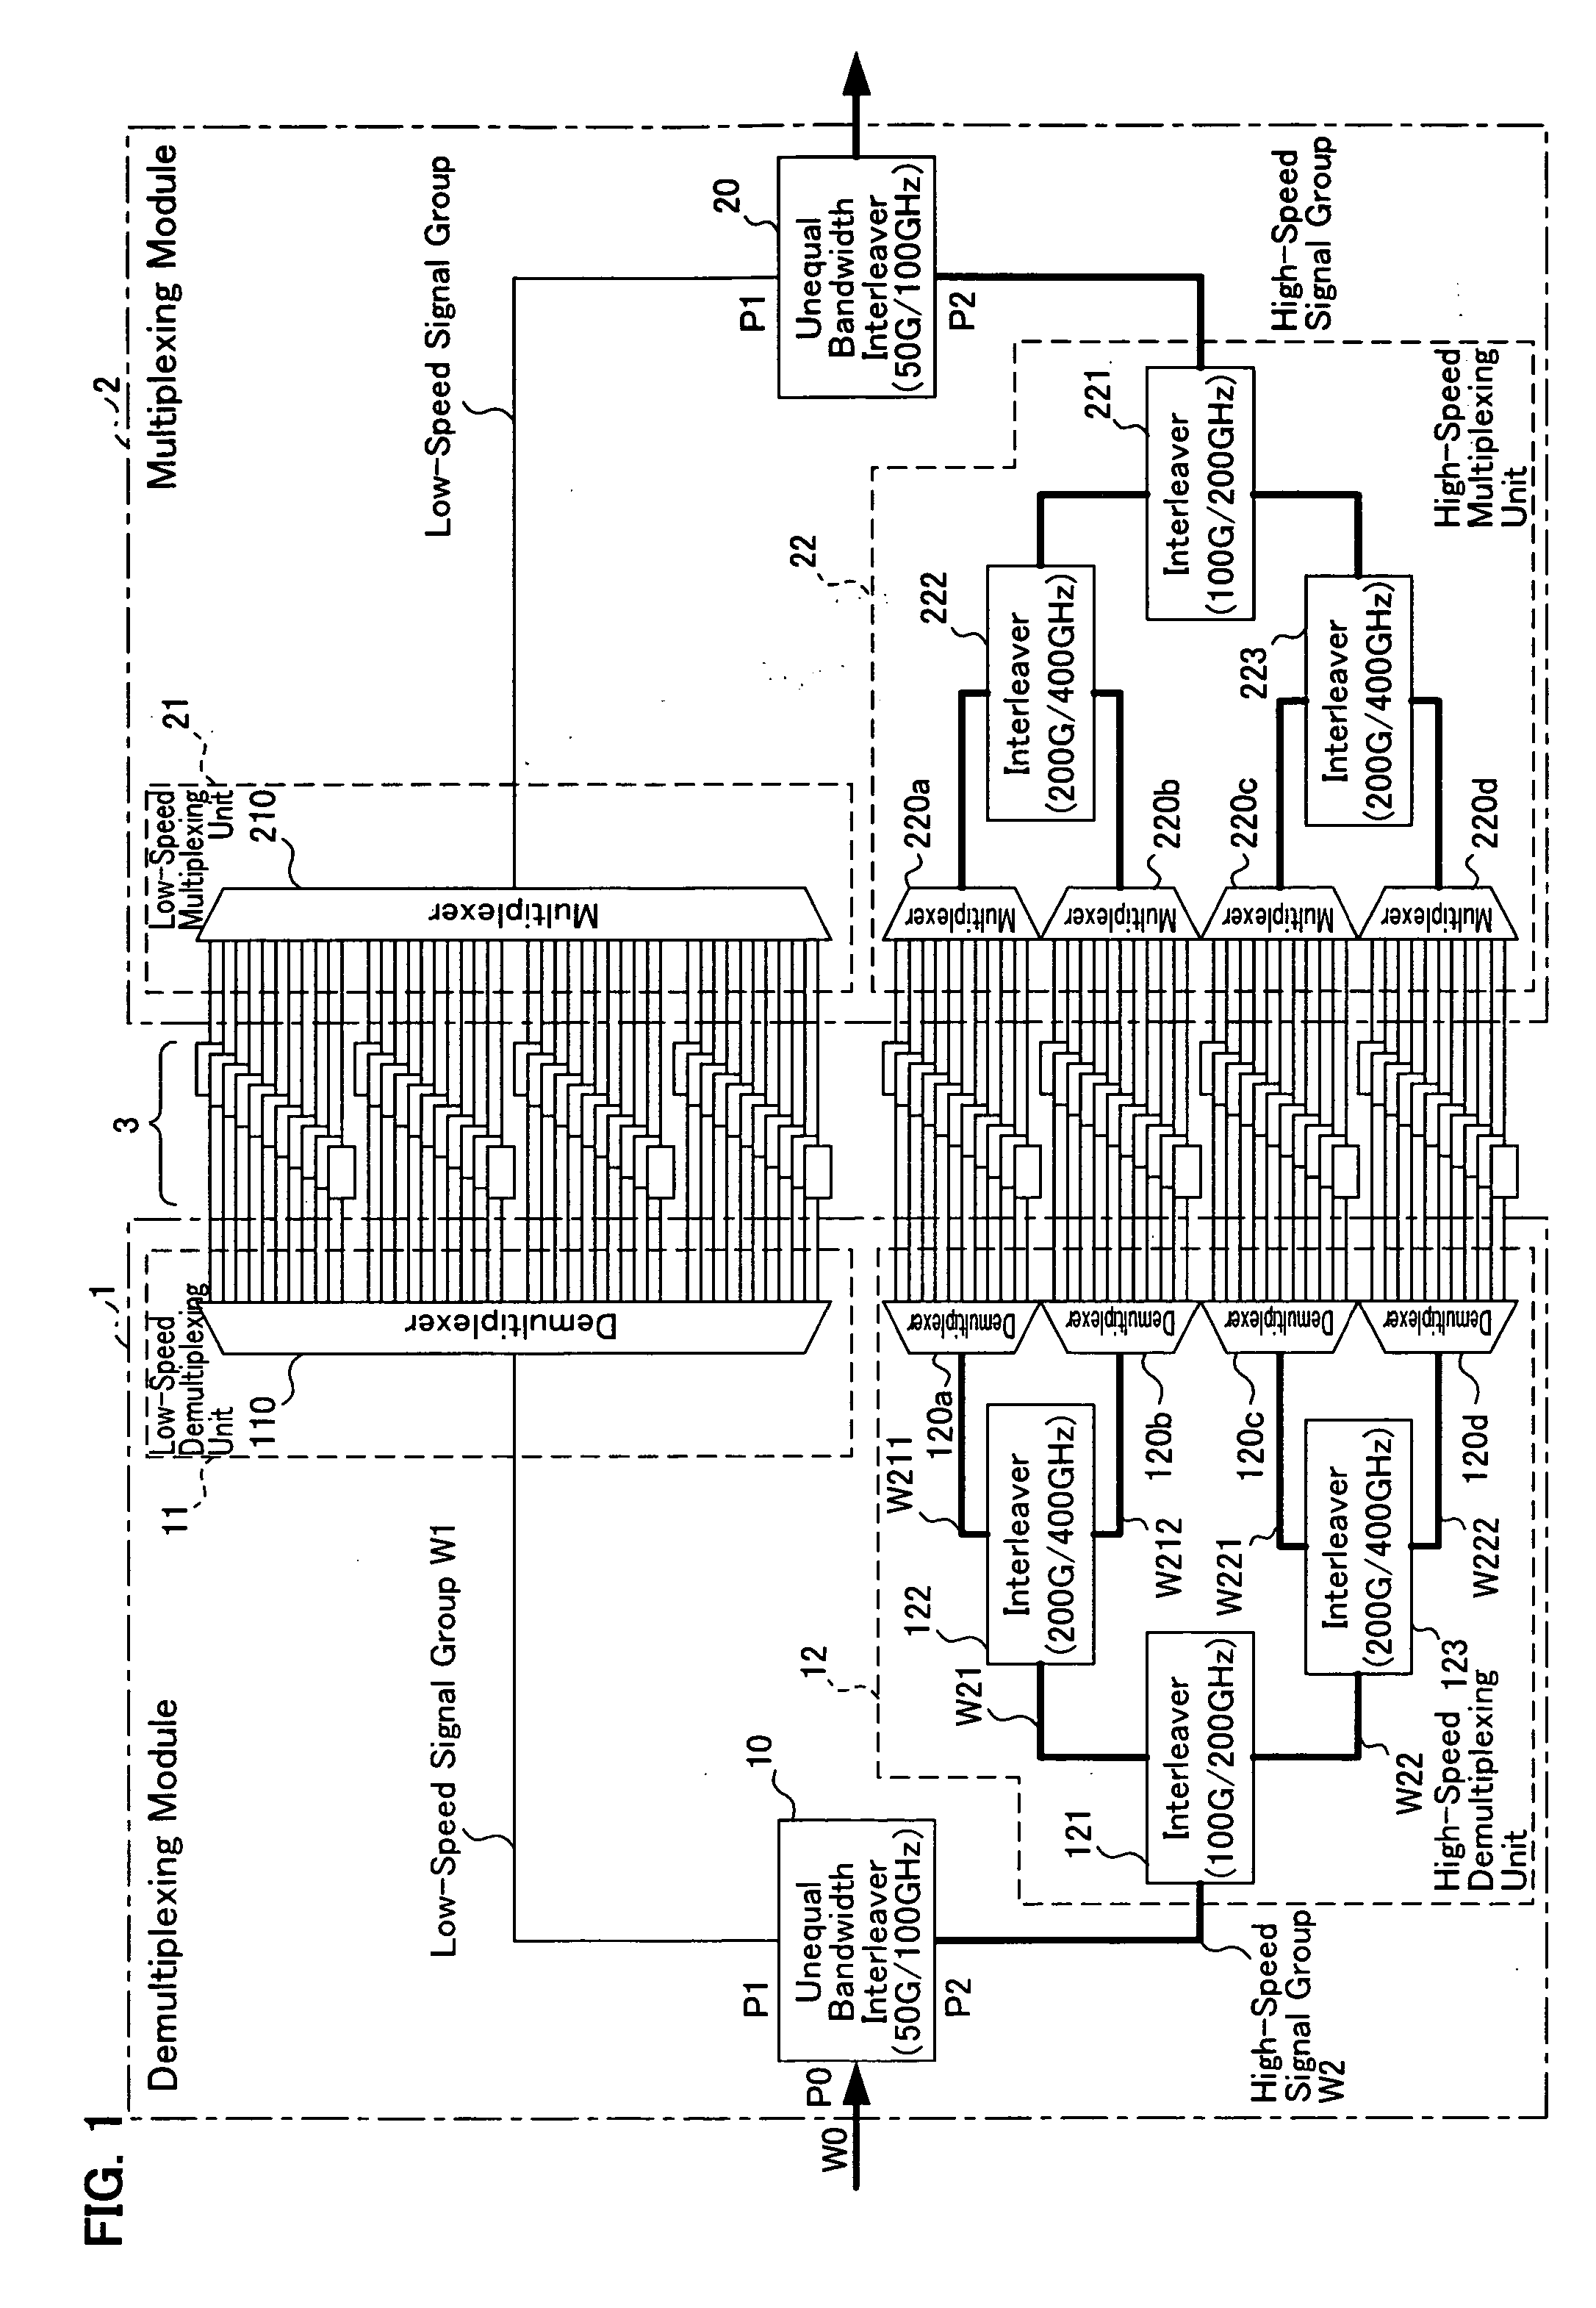 Wavelength division multiplexing transmission system